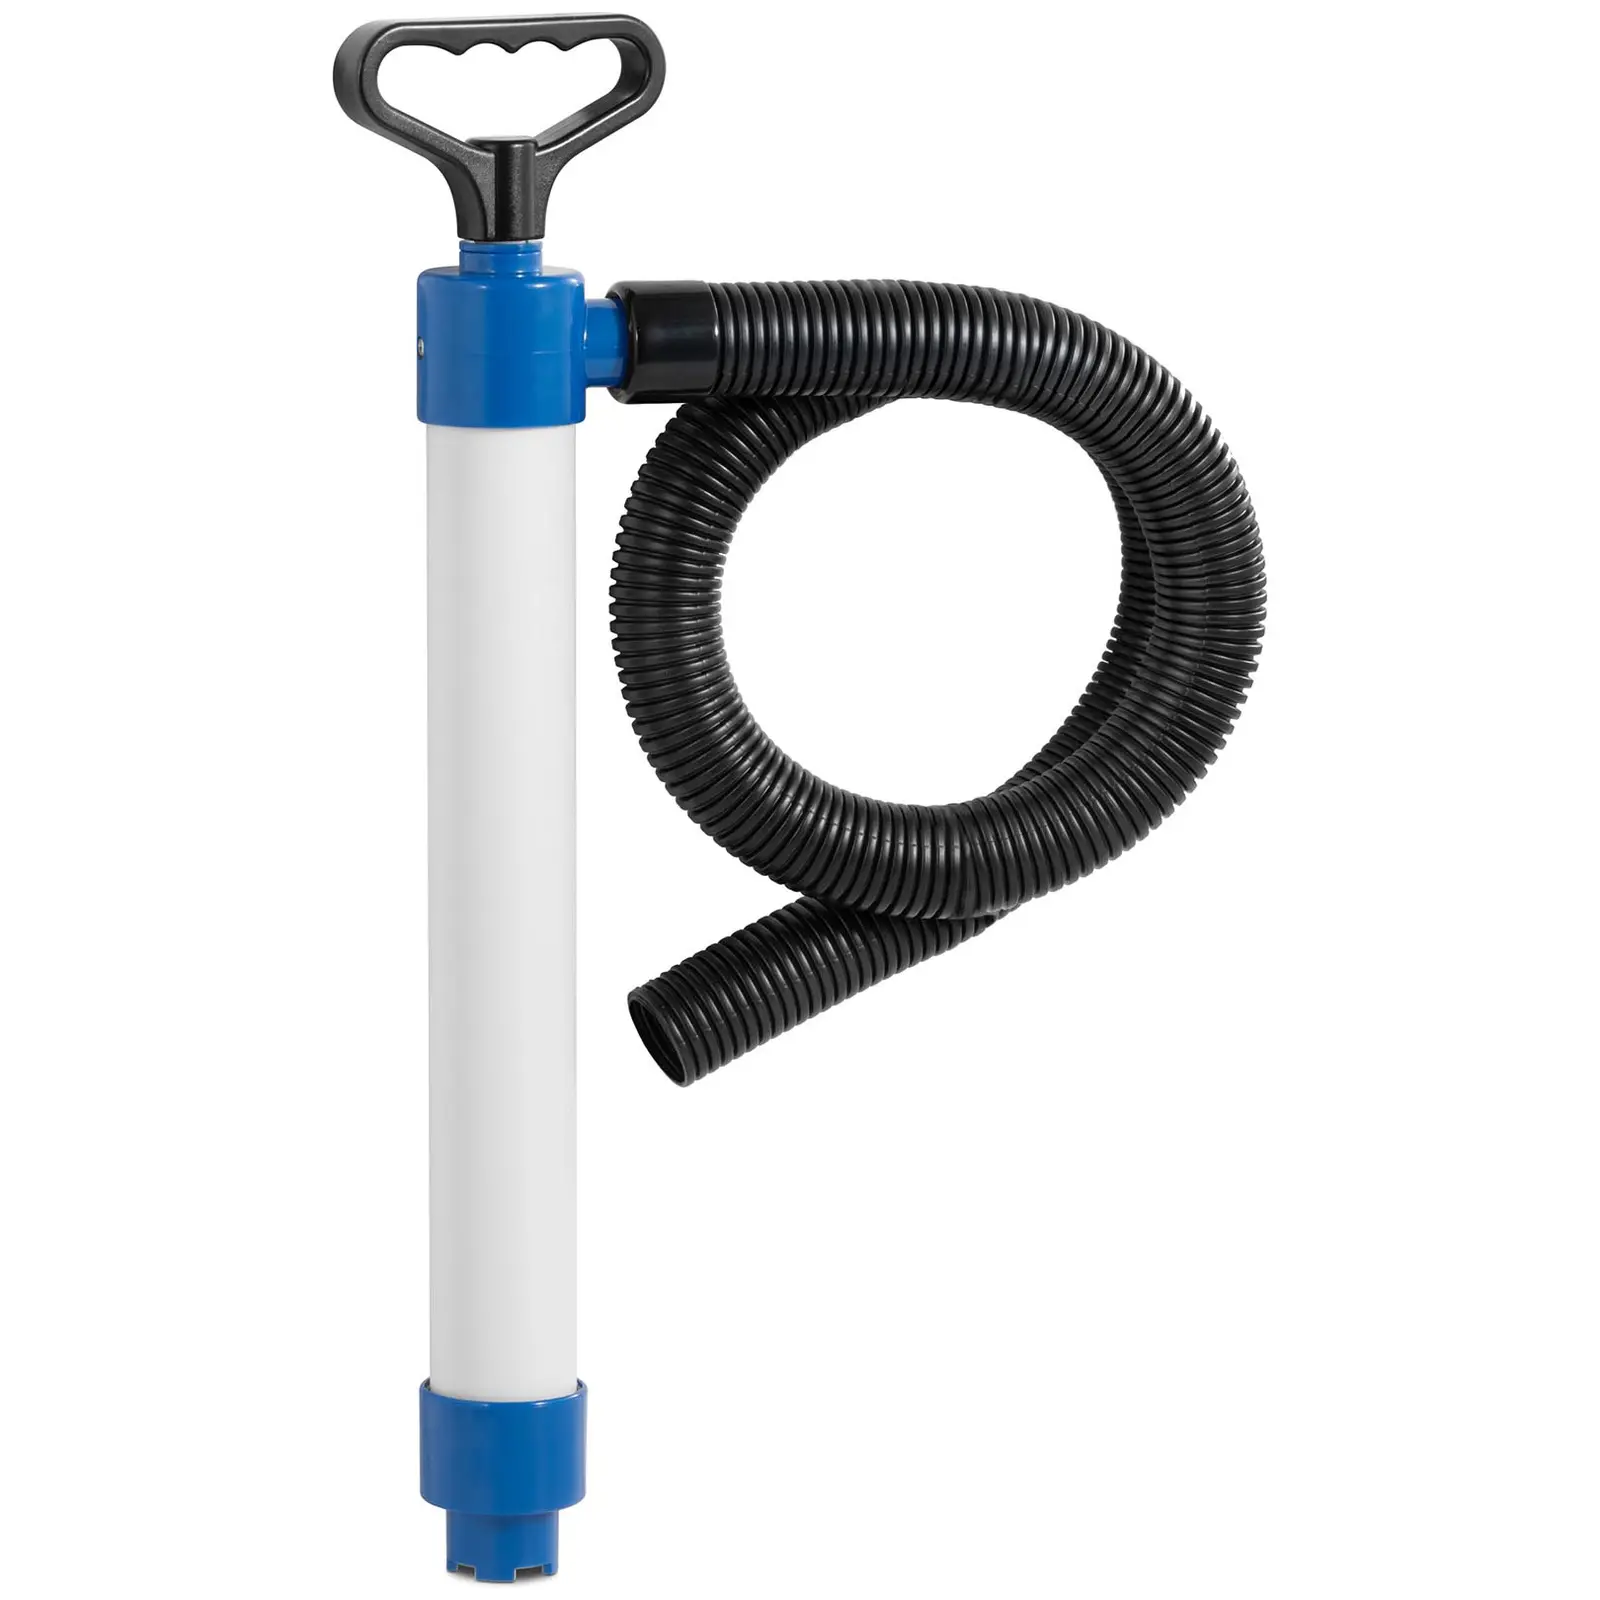 Manual water pump bilge pump - 0.5 m delivery head - 45 L/min flow rate - incl. hose